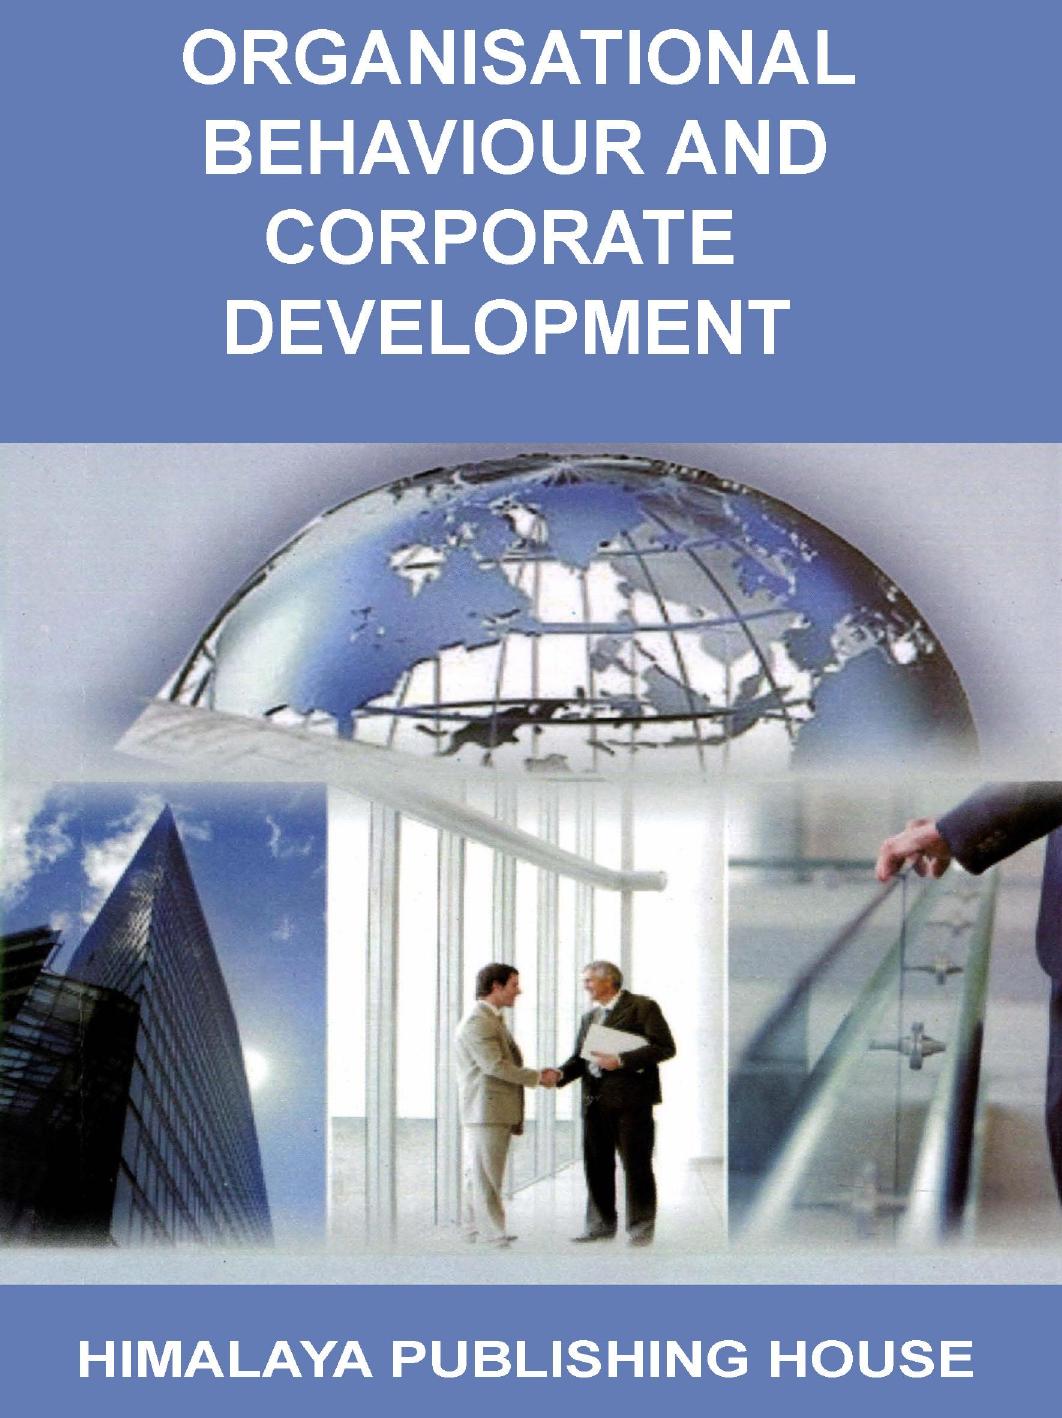 Organisational Behaviour and Corporate Development by M.N. Mishra